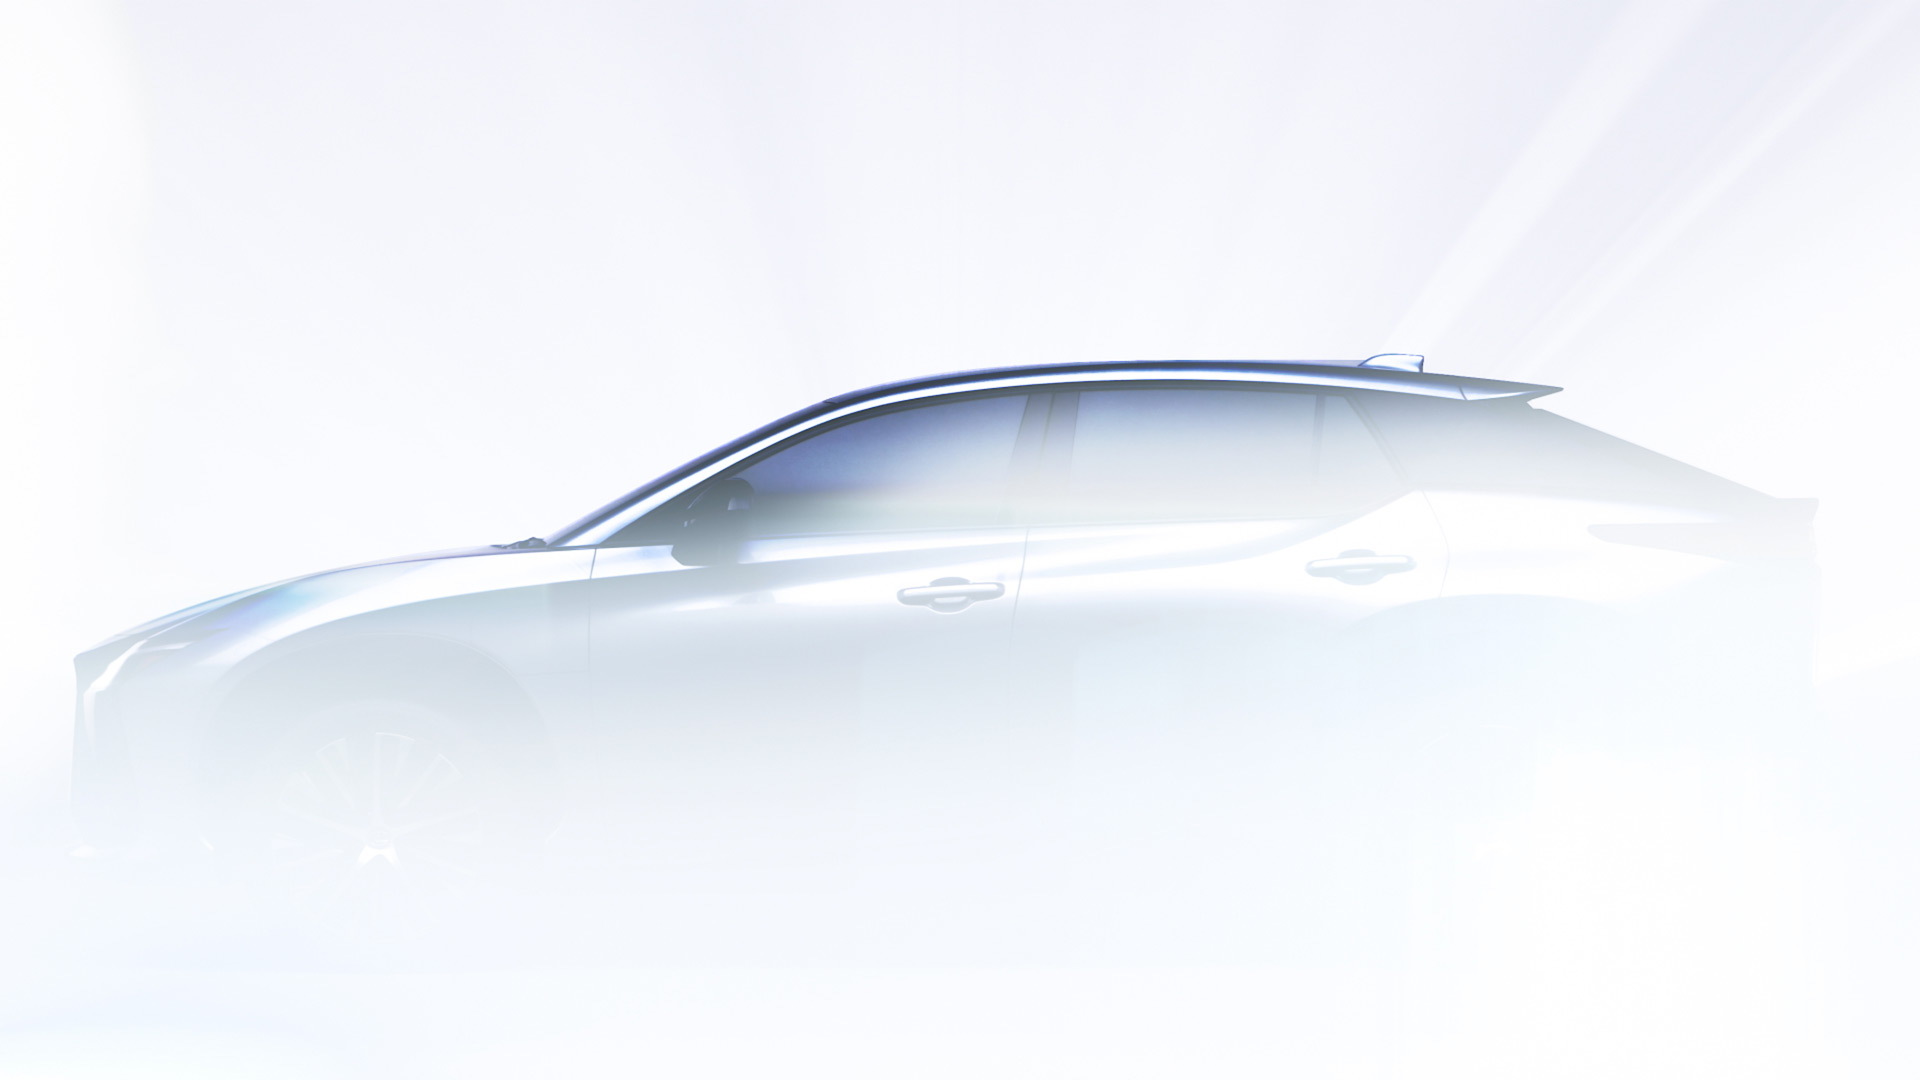 Teaser for Lexus RZ debuting in 2022